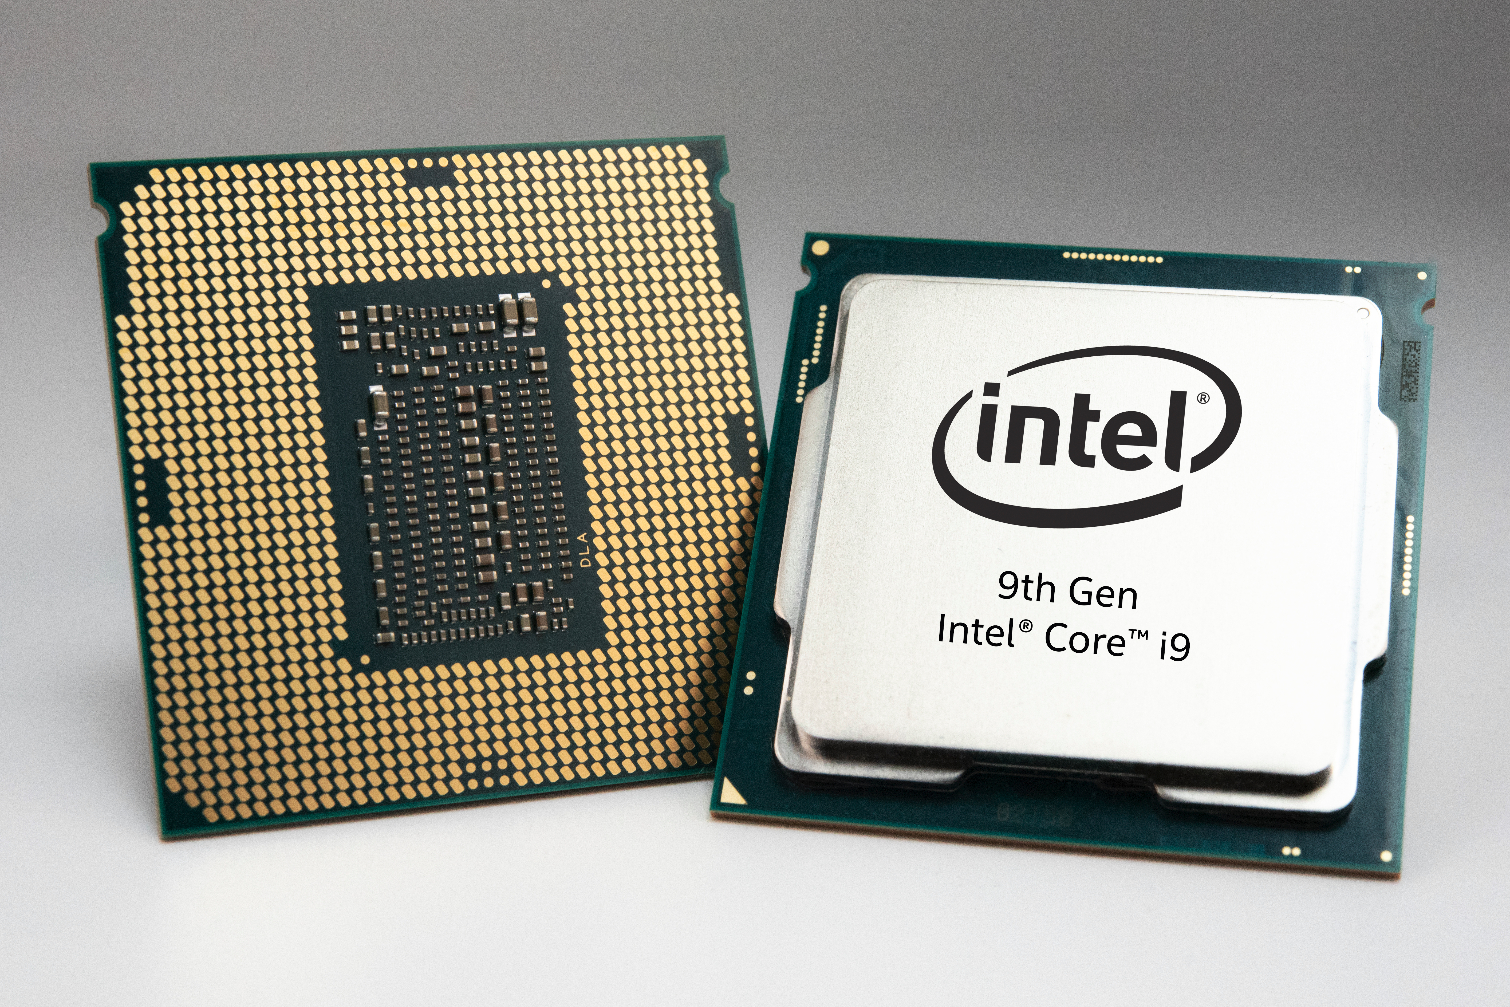 Zich voorstellen moord Snel Intel Core i7-9700K 9th Gen CPU Review: Eight Cores And No Hyper-Threading  - Tom's Hardware | Tom's Hardware